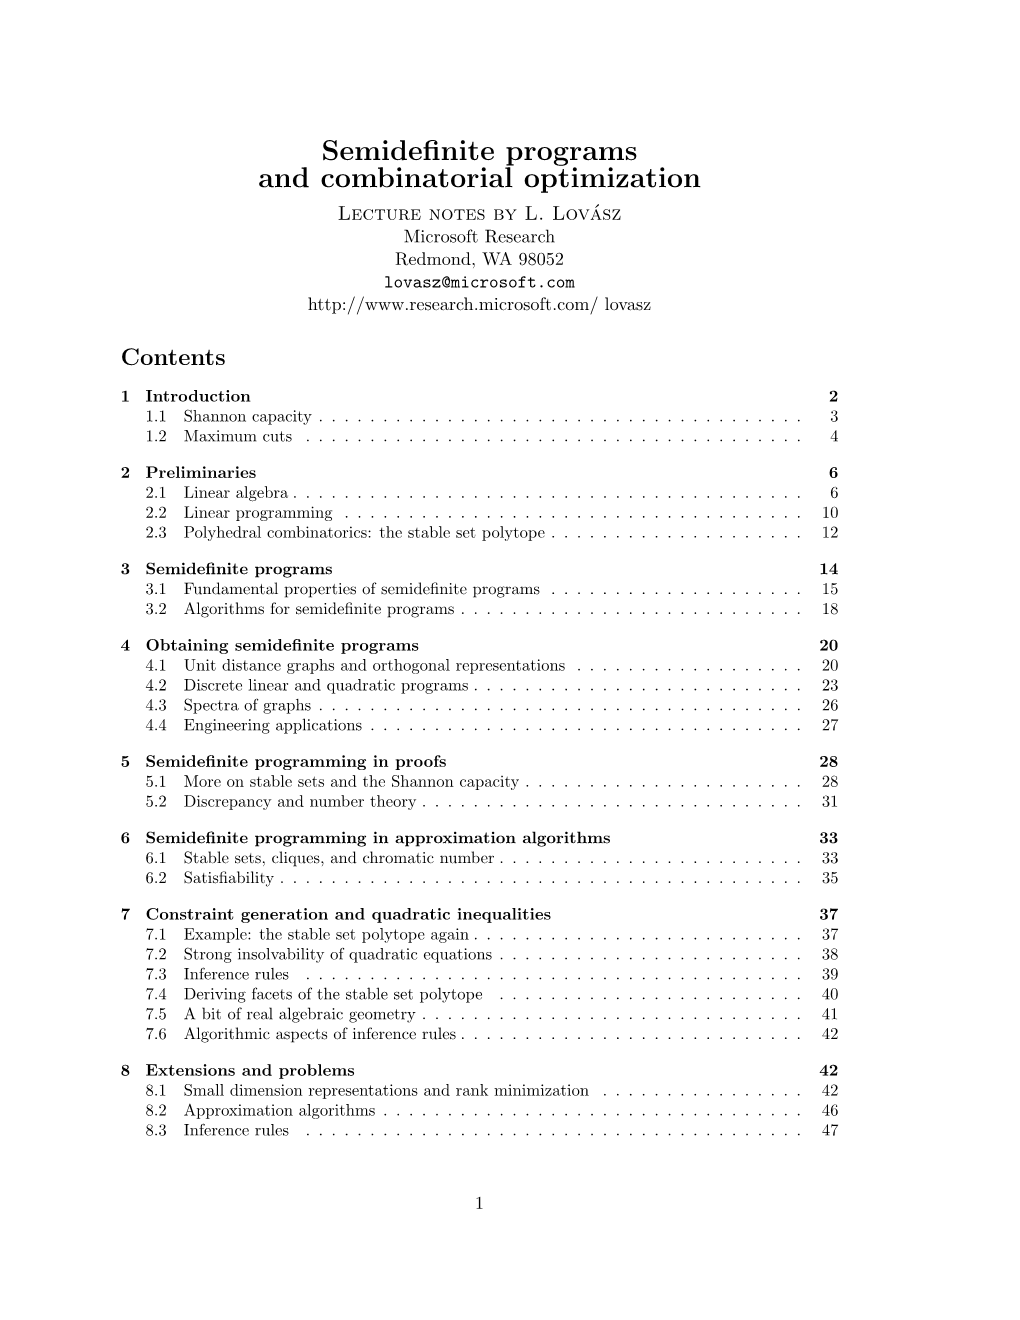 Semidefinite Programs and Combinatorial Optimization